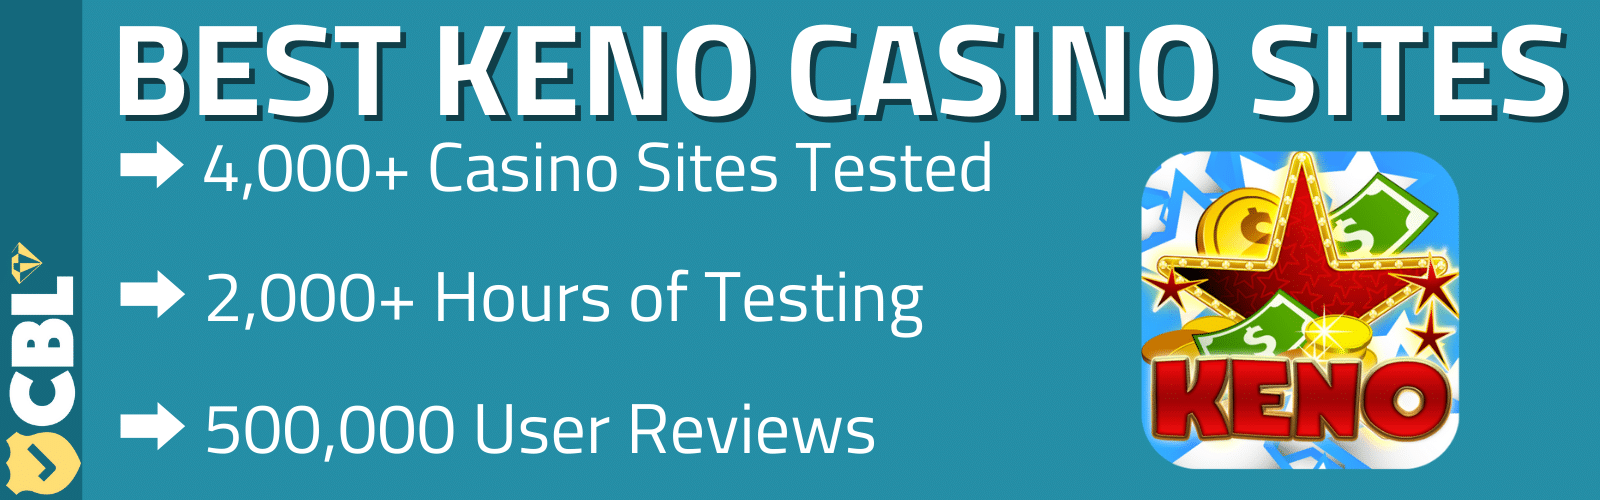 BEST KENO CASINO SITES